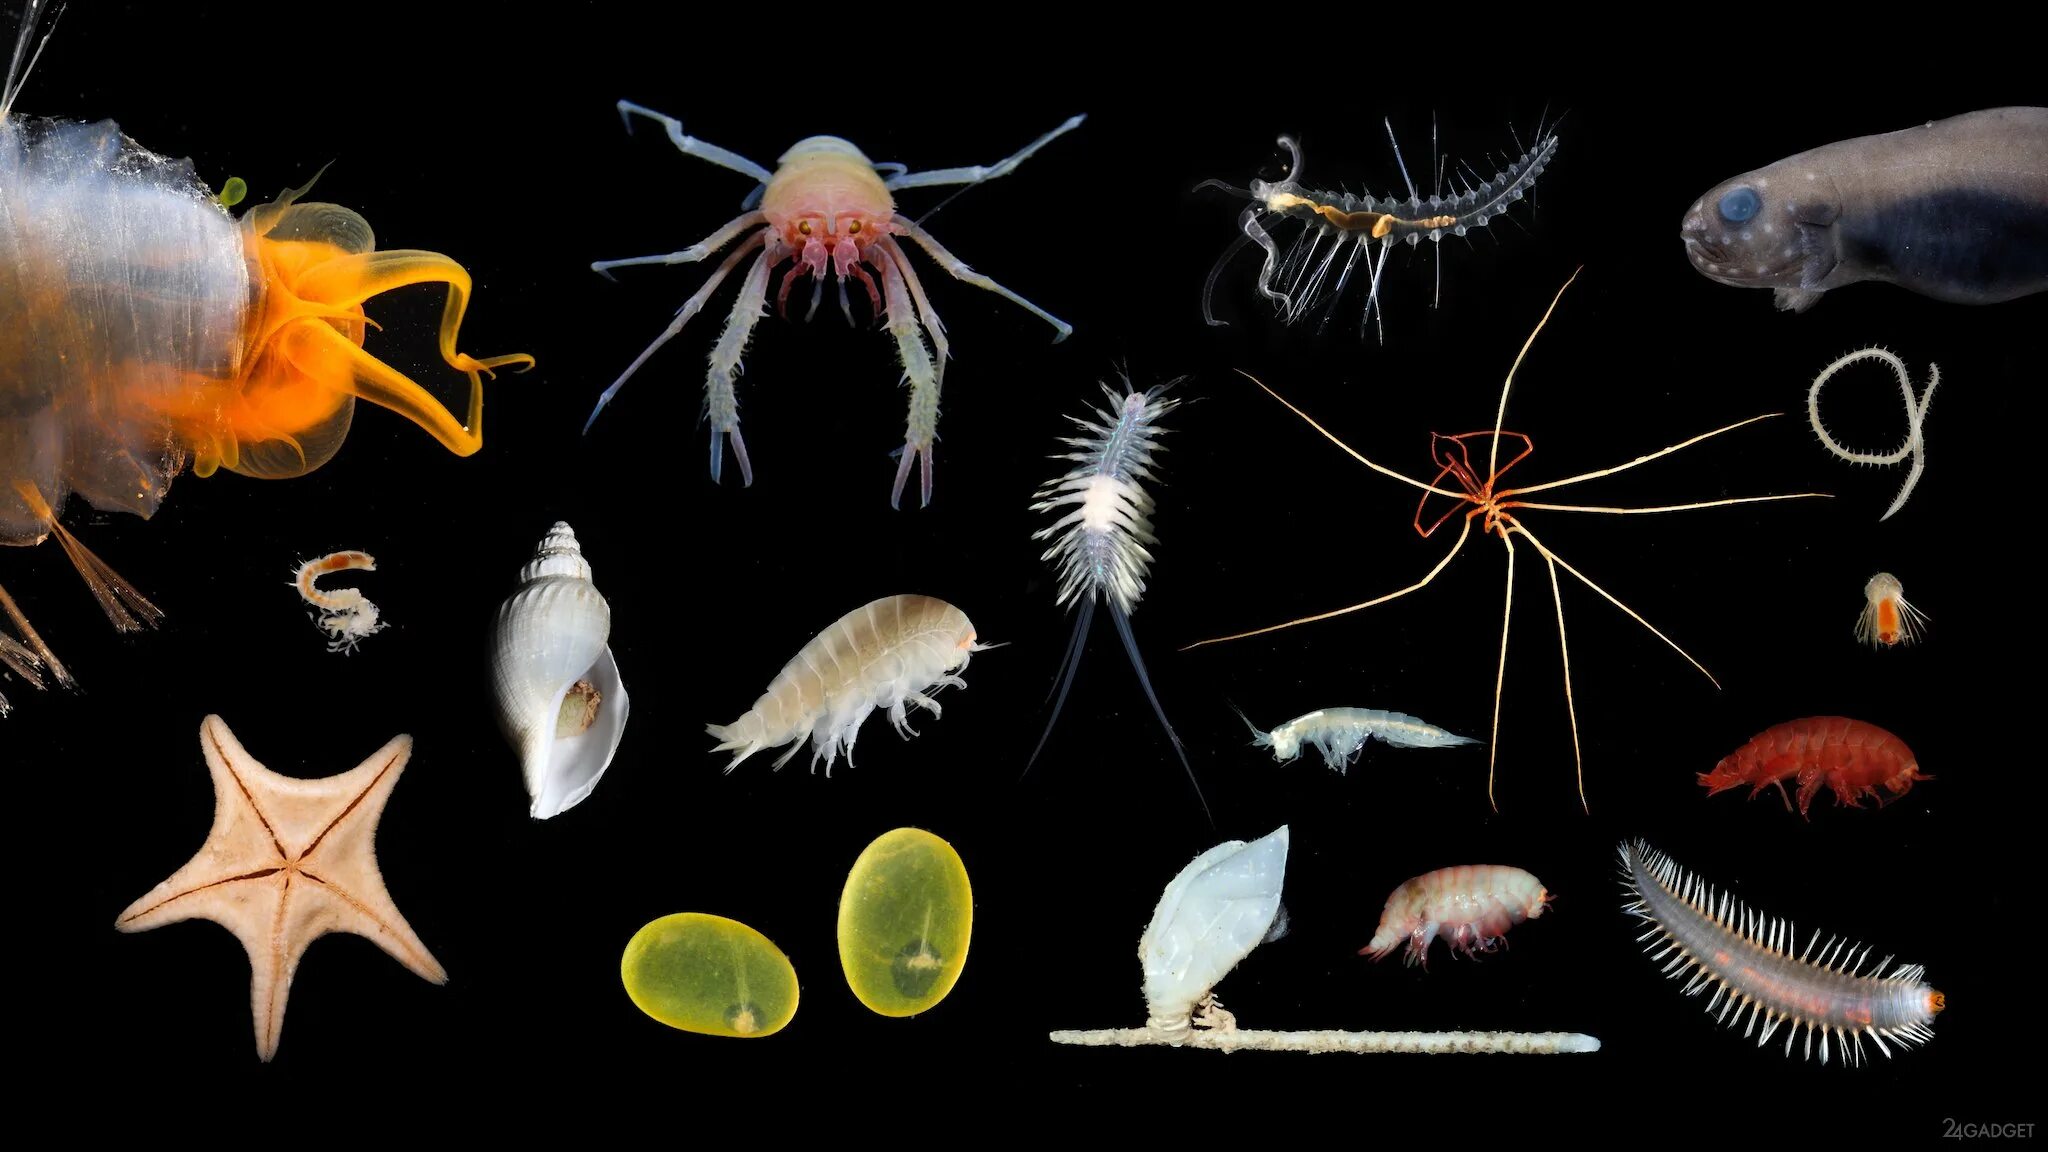 Группа морских организмов на дне океана. Обитатели морских глубин. Глубоководные морские обитатели. Обитатели глубин океана. Морские беспозвоночные животные.